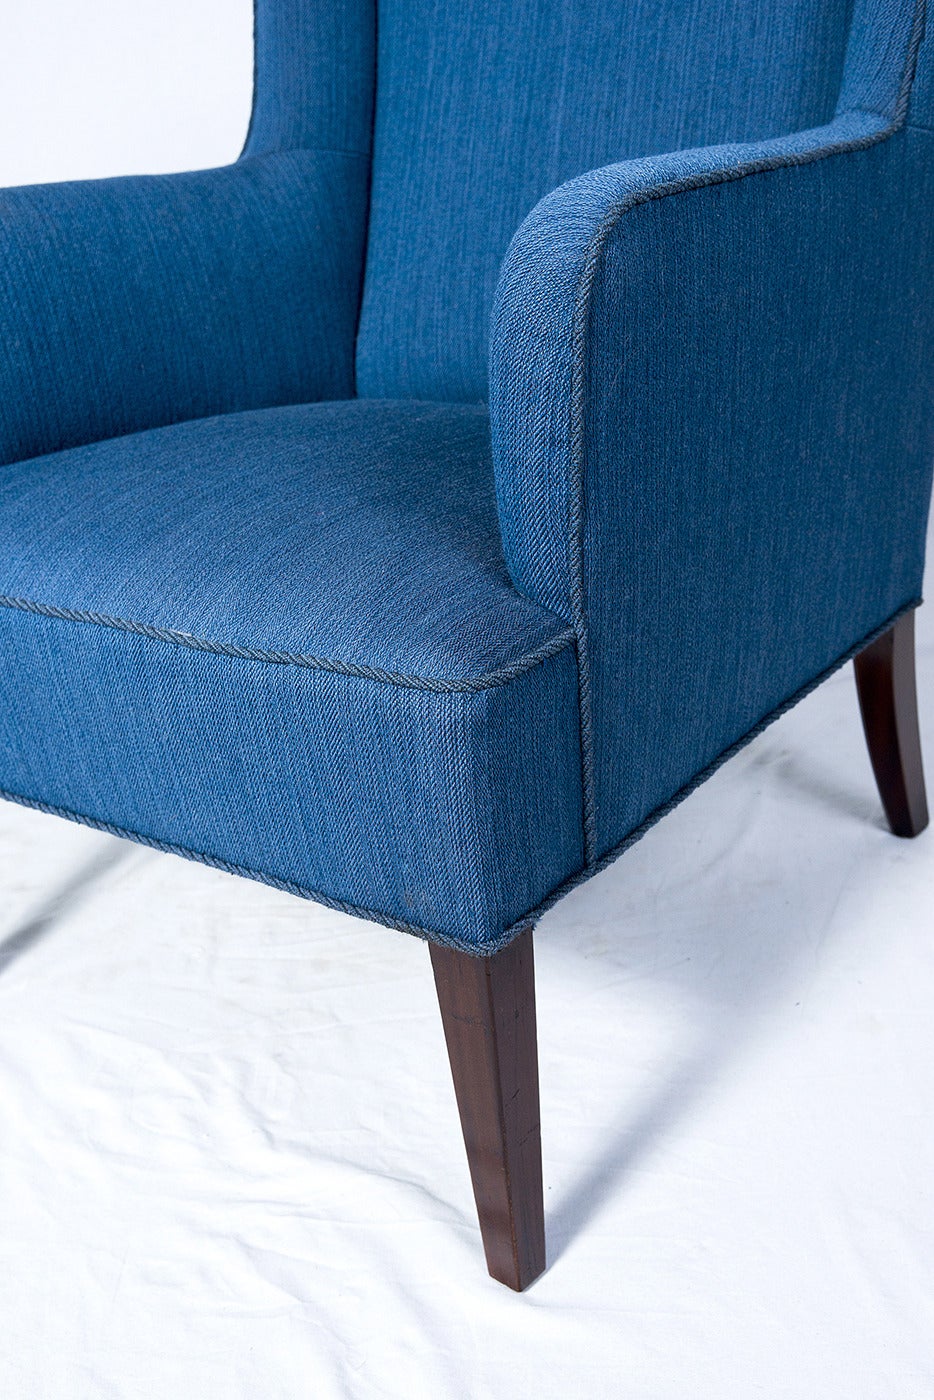 Fabric Frits Henningsen Lounge Chair